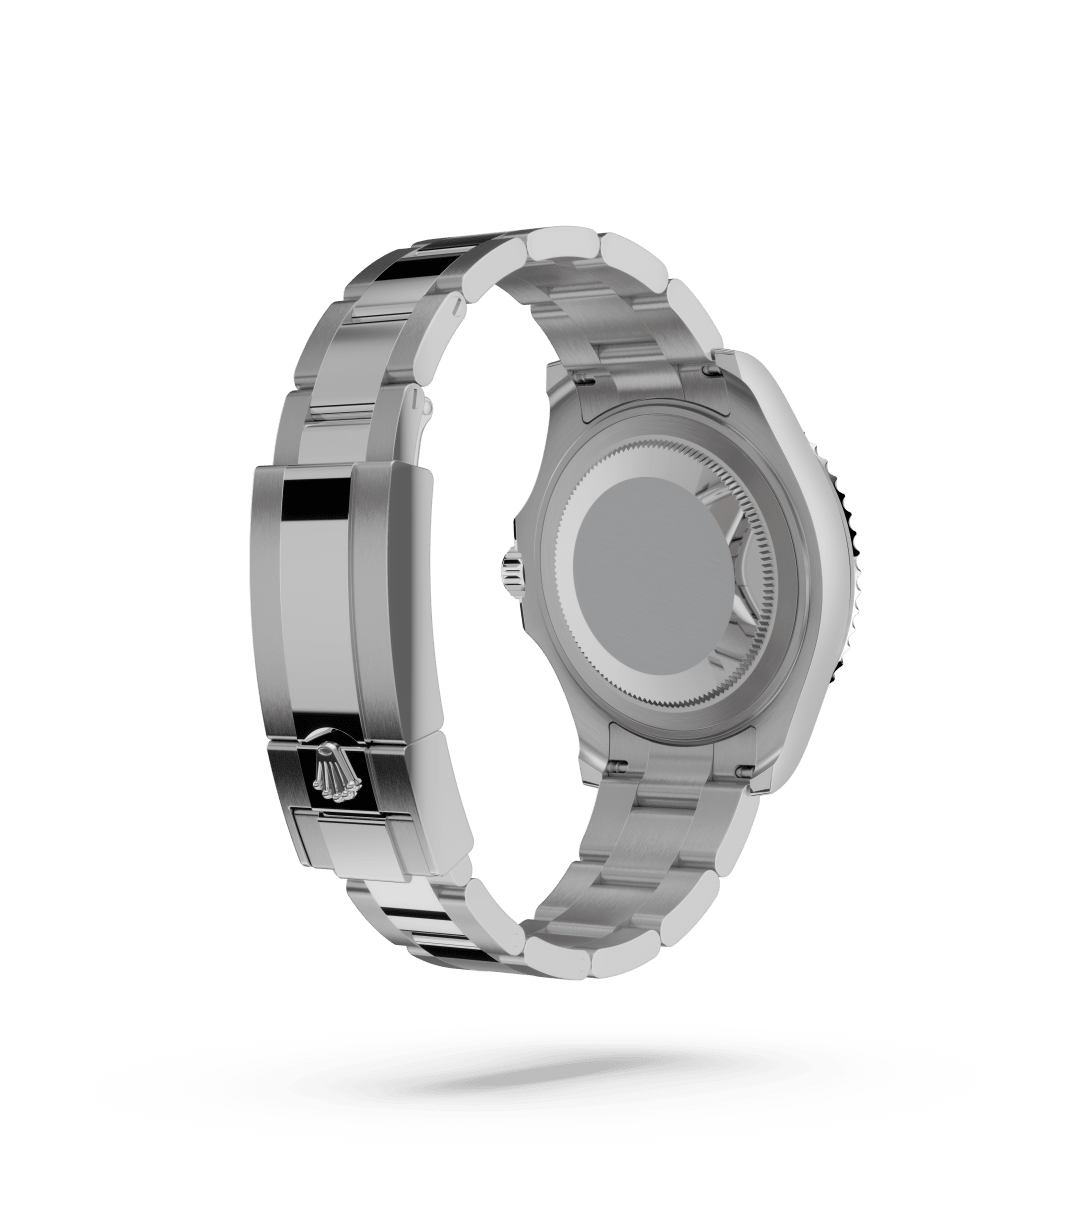 Rolex Watch Wrist